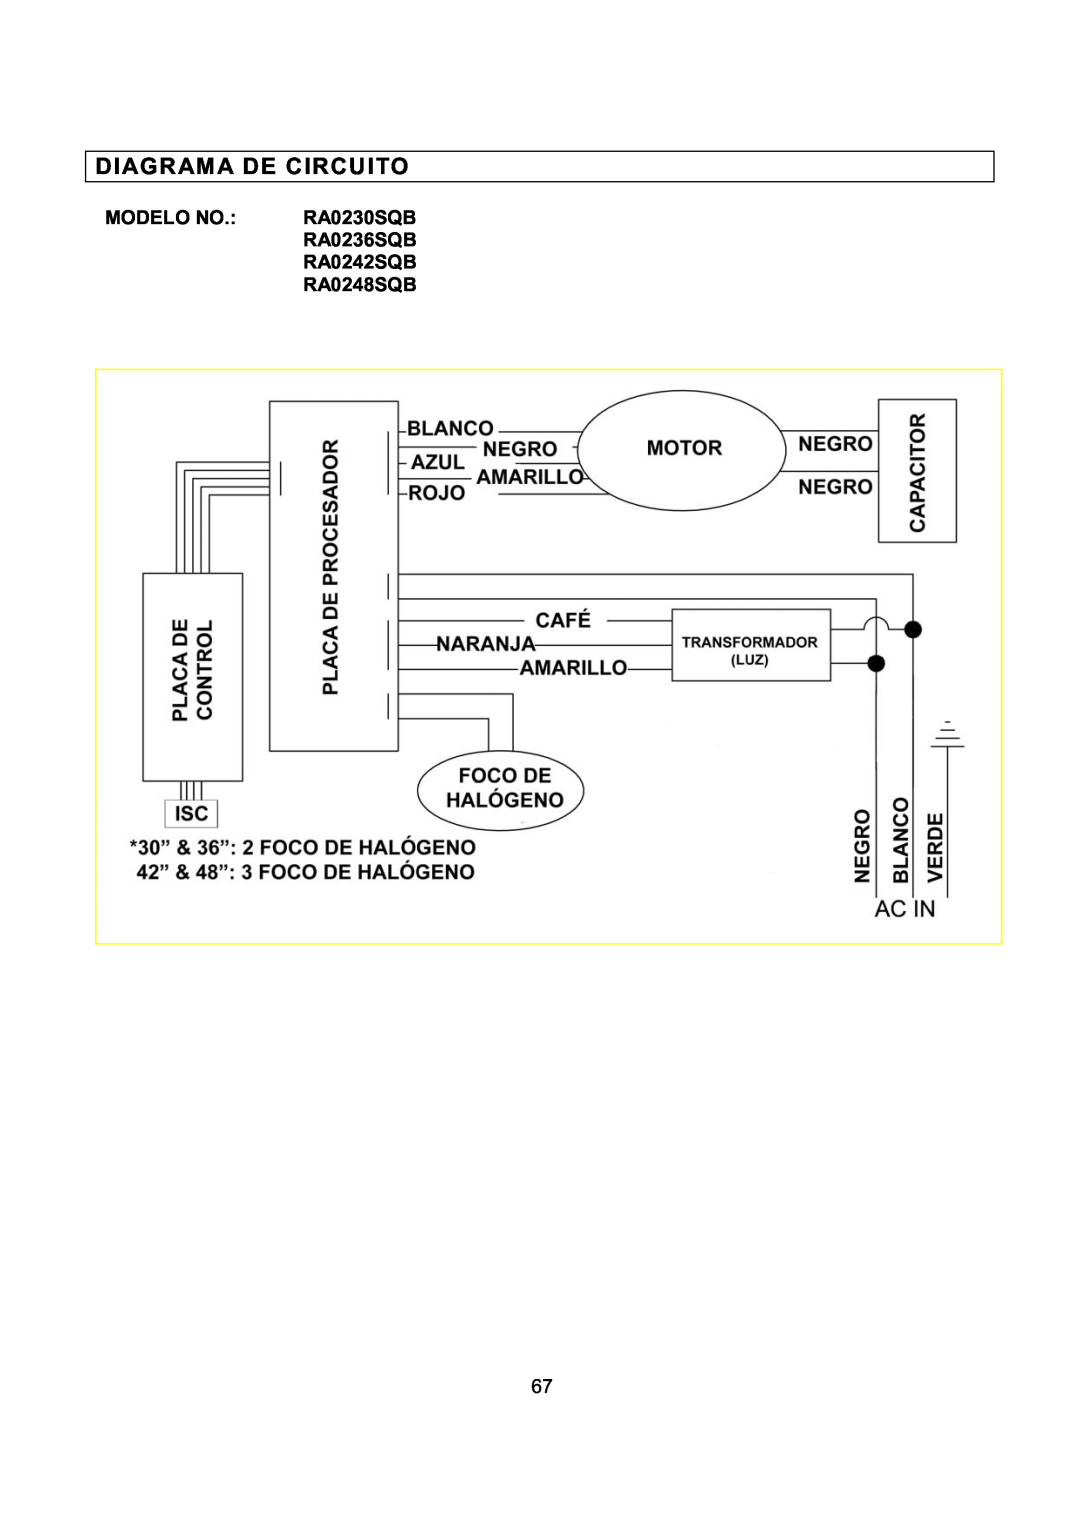 Kobe Range Hoods RA0230SQB installation instructions Diagrama De Circuito, Modelo No, RA0236SQB, RA0242SQB, RA0248SQB 